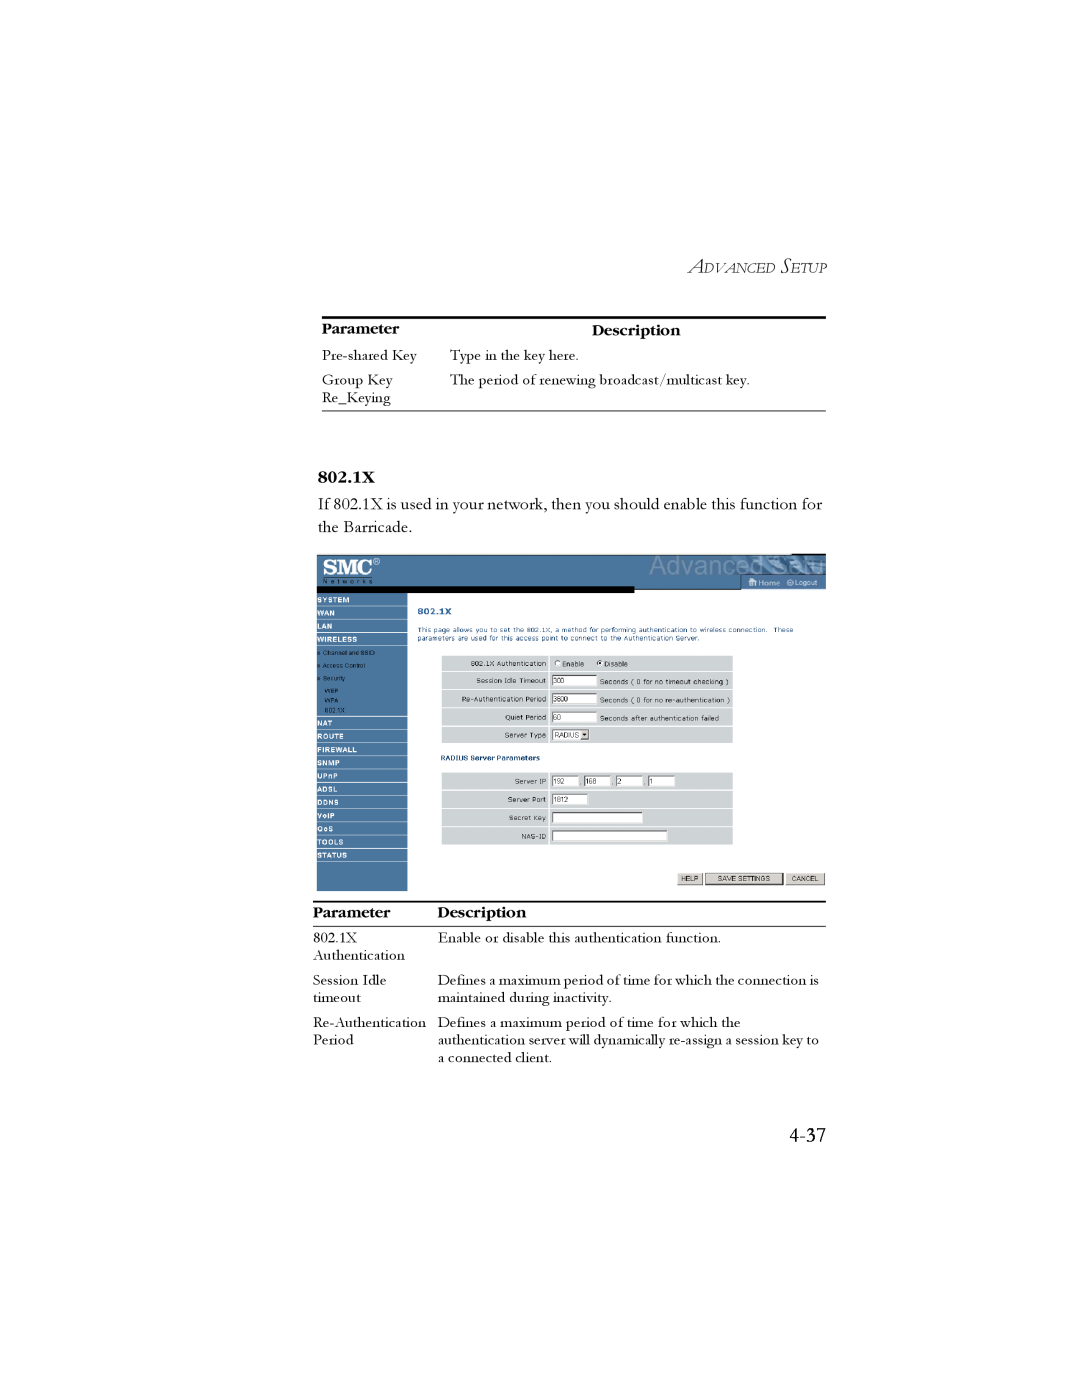 SMC Networks SMC7908VoWBRA manual 4-37, 802.1X, Parameter, Description 